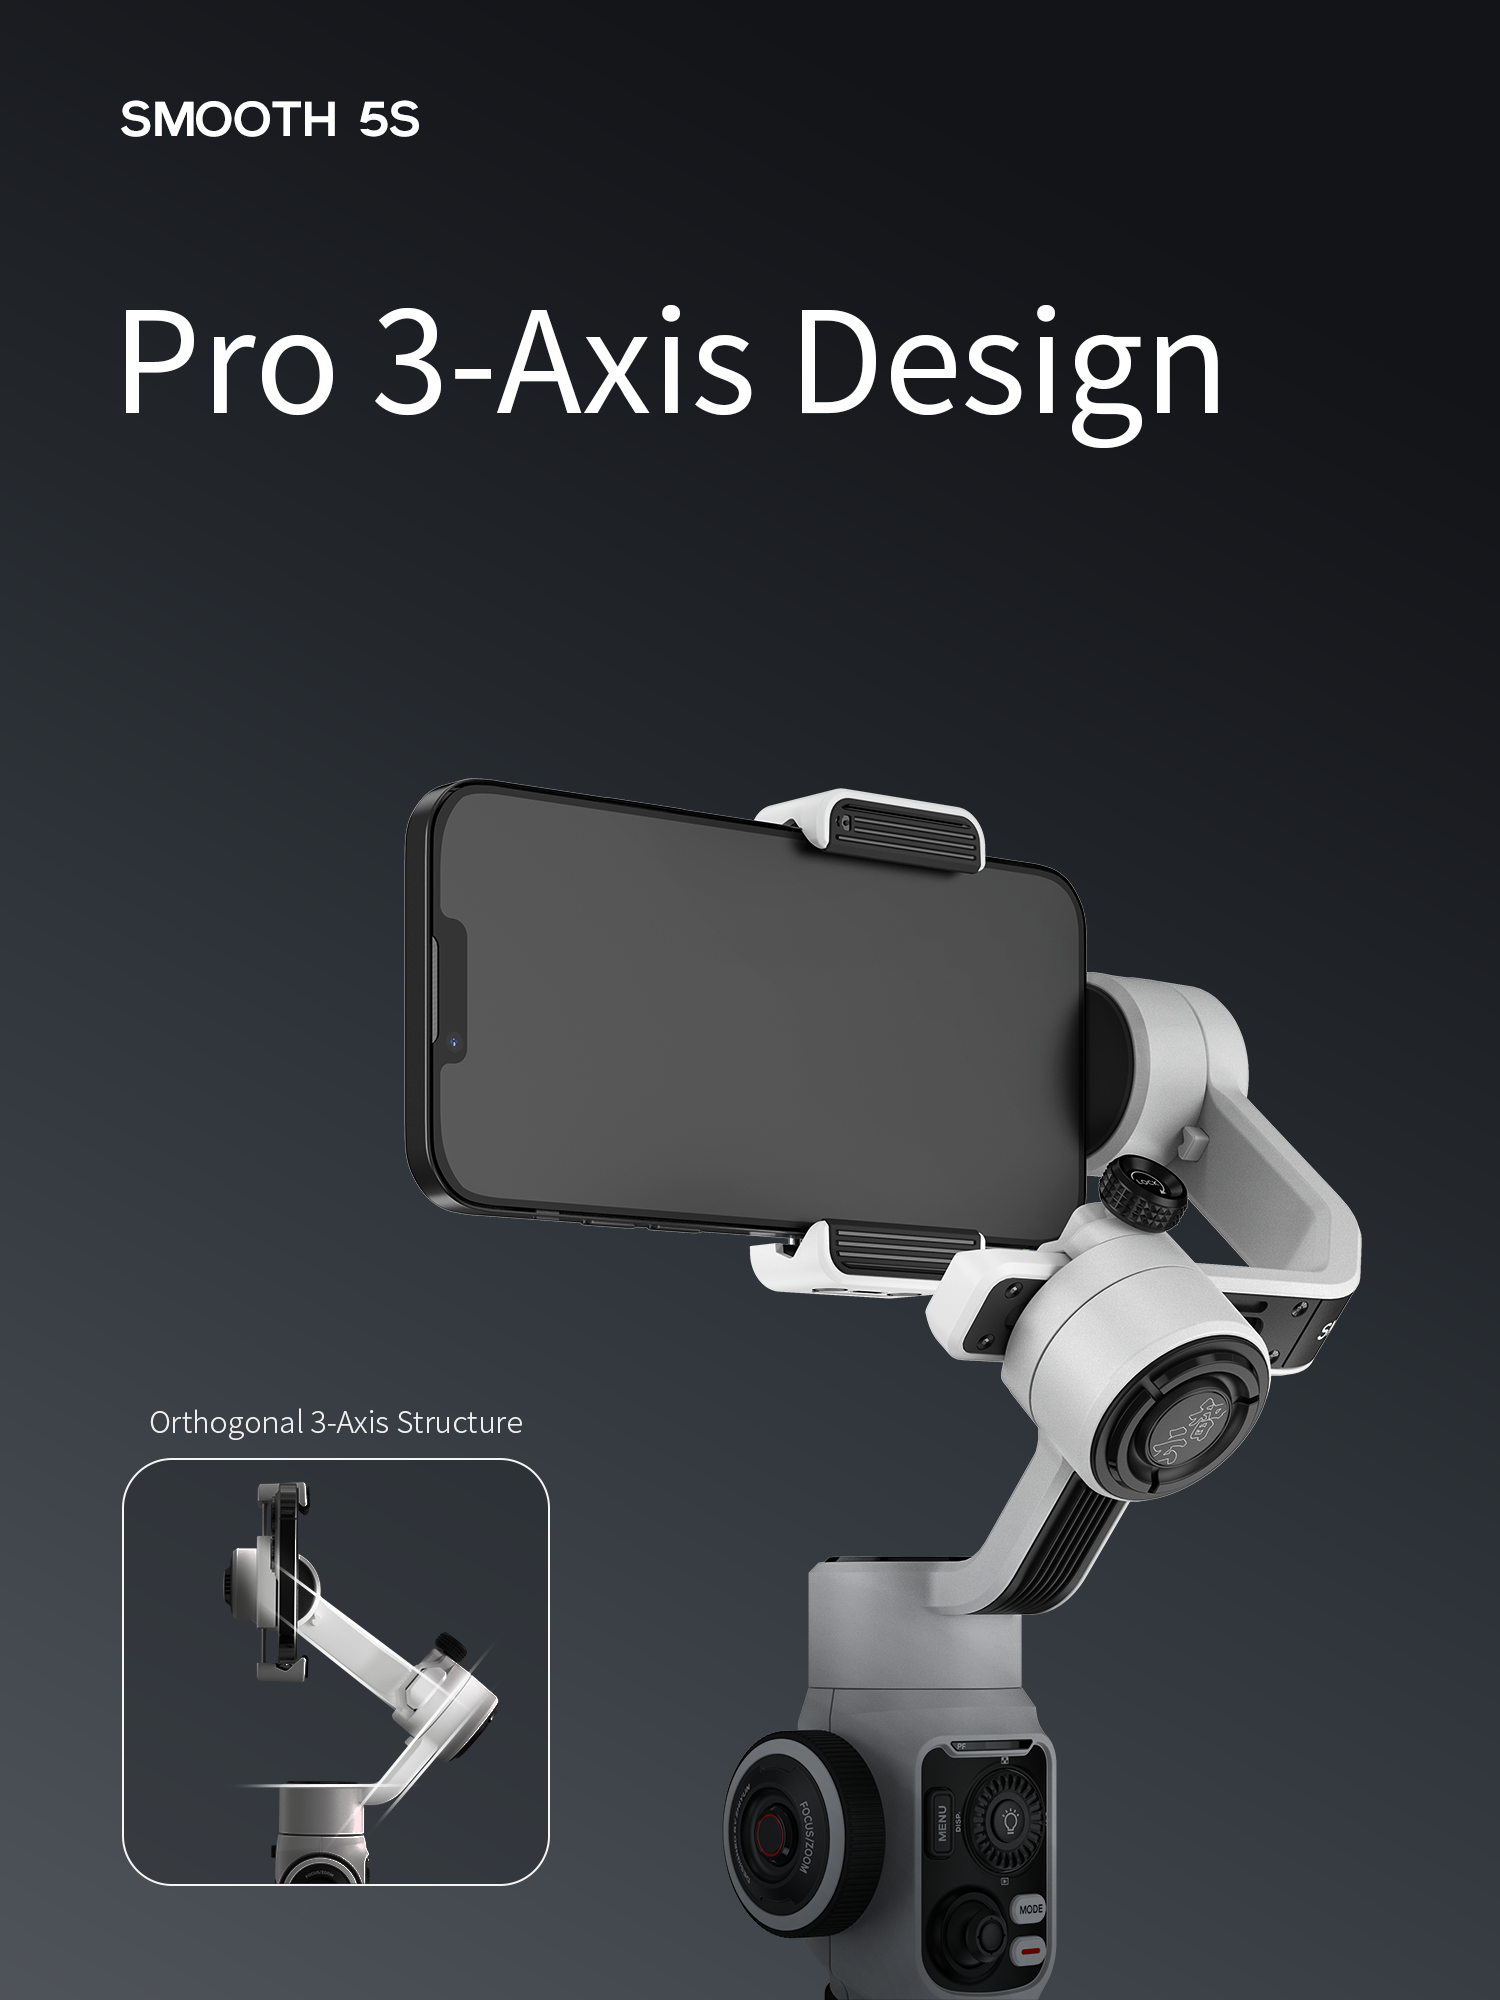 02 Pro 3-Axis Design